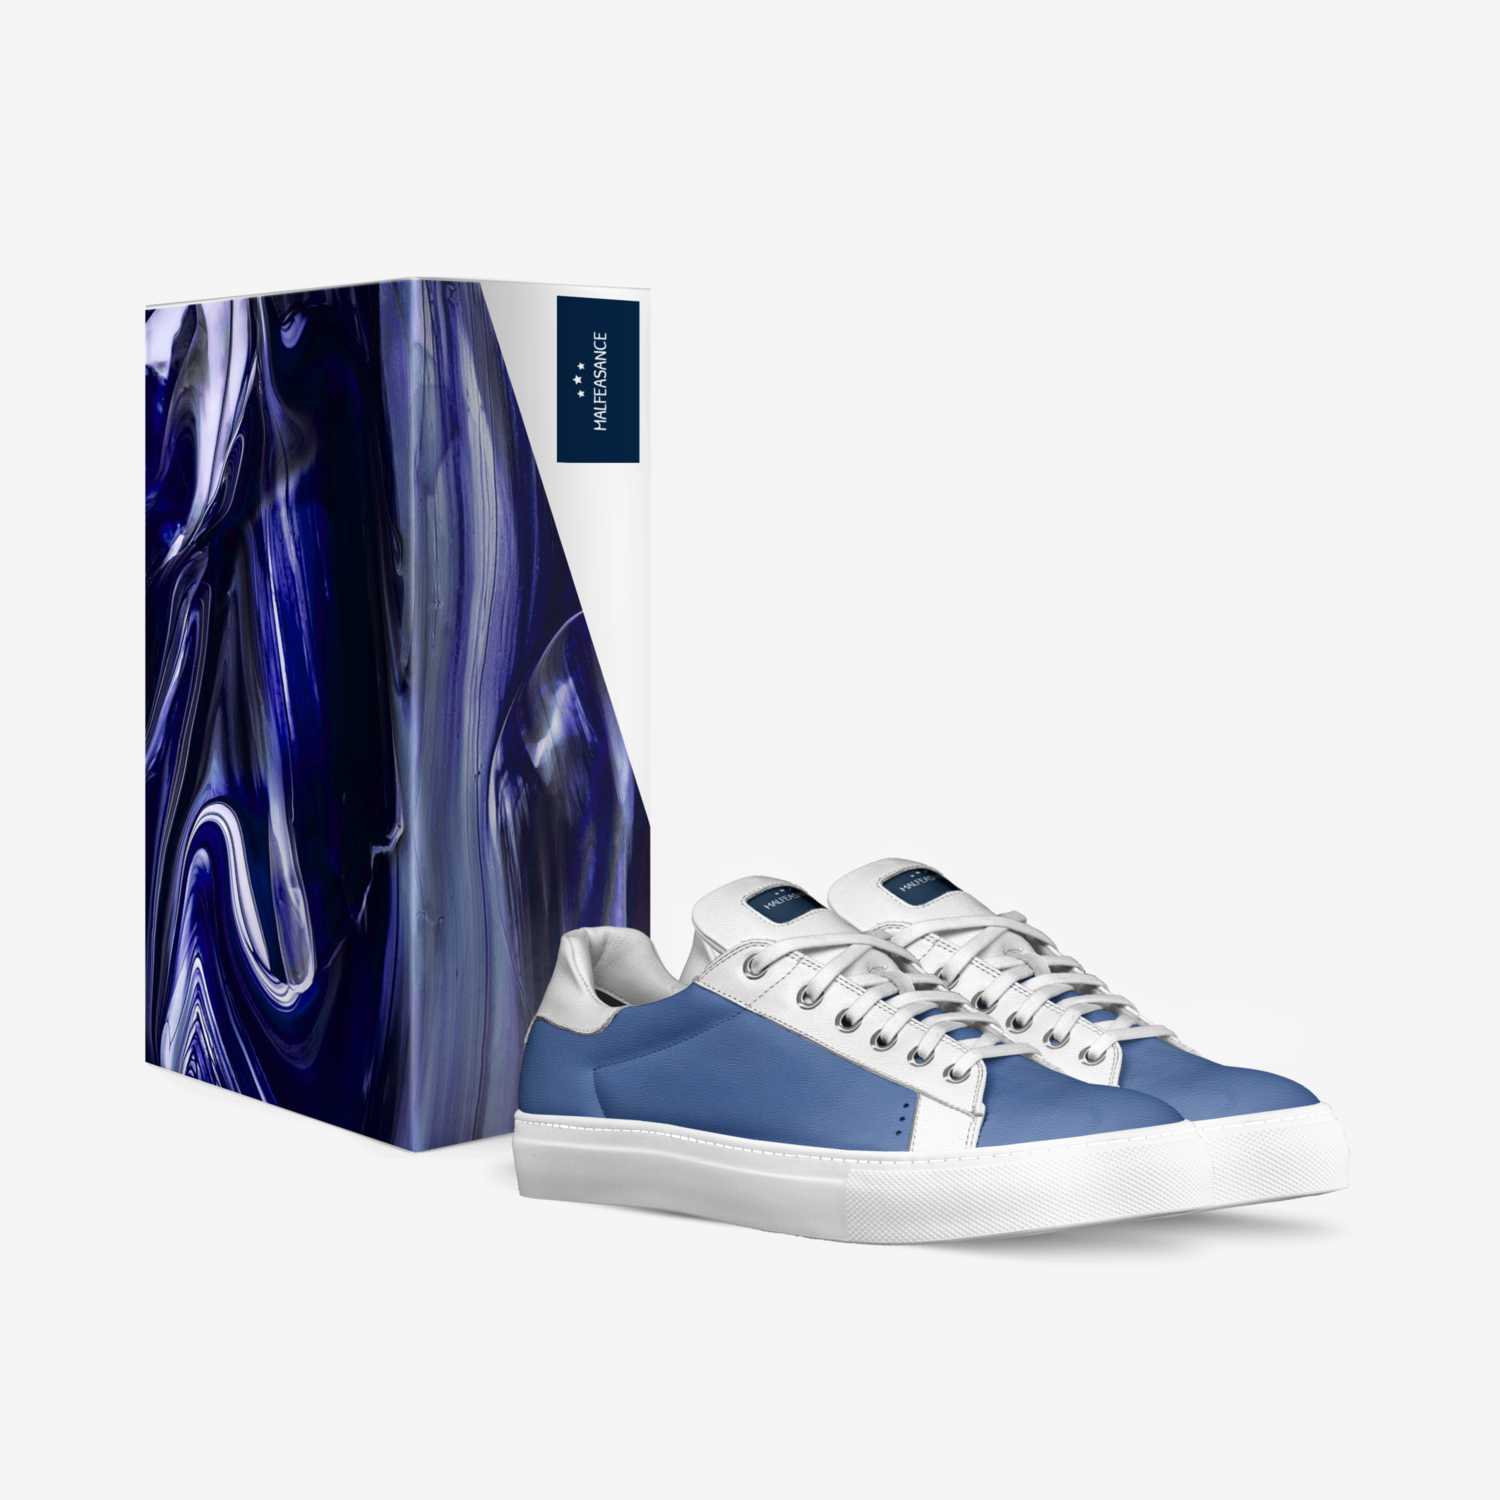 malfeasance custom made in Italy shoes by Tahir Hightower | Box view